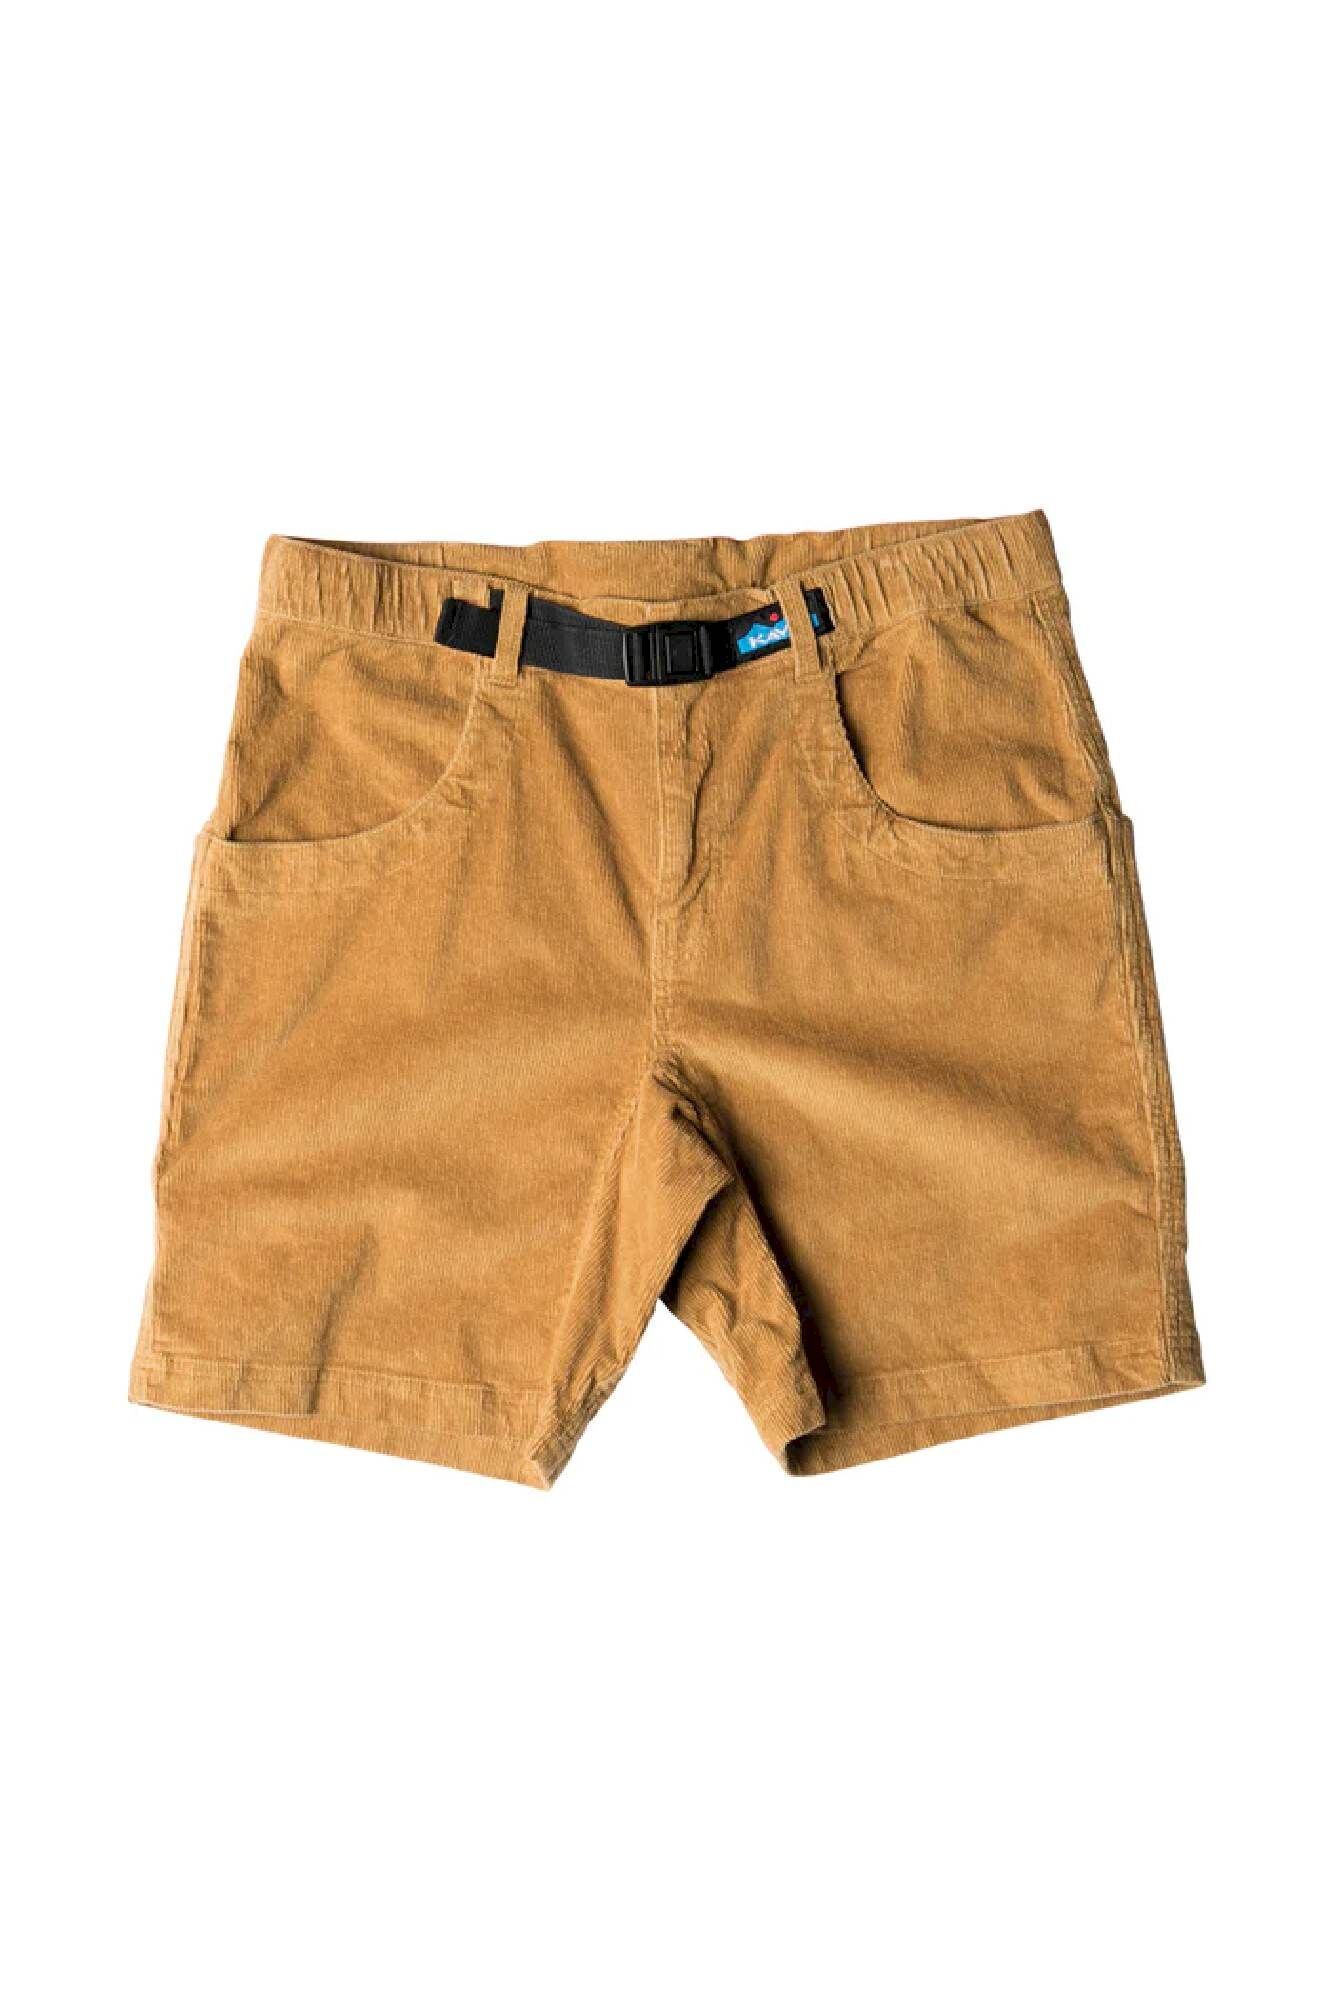 Kavu Chilli Cord Short - Walking shorts - Men's | Hardloop